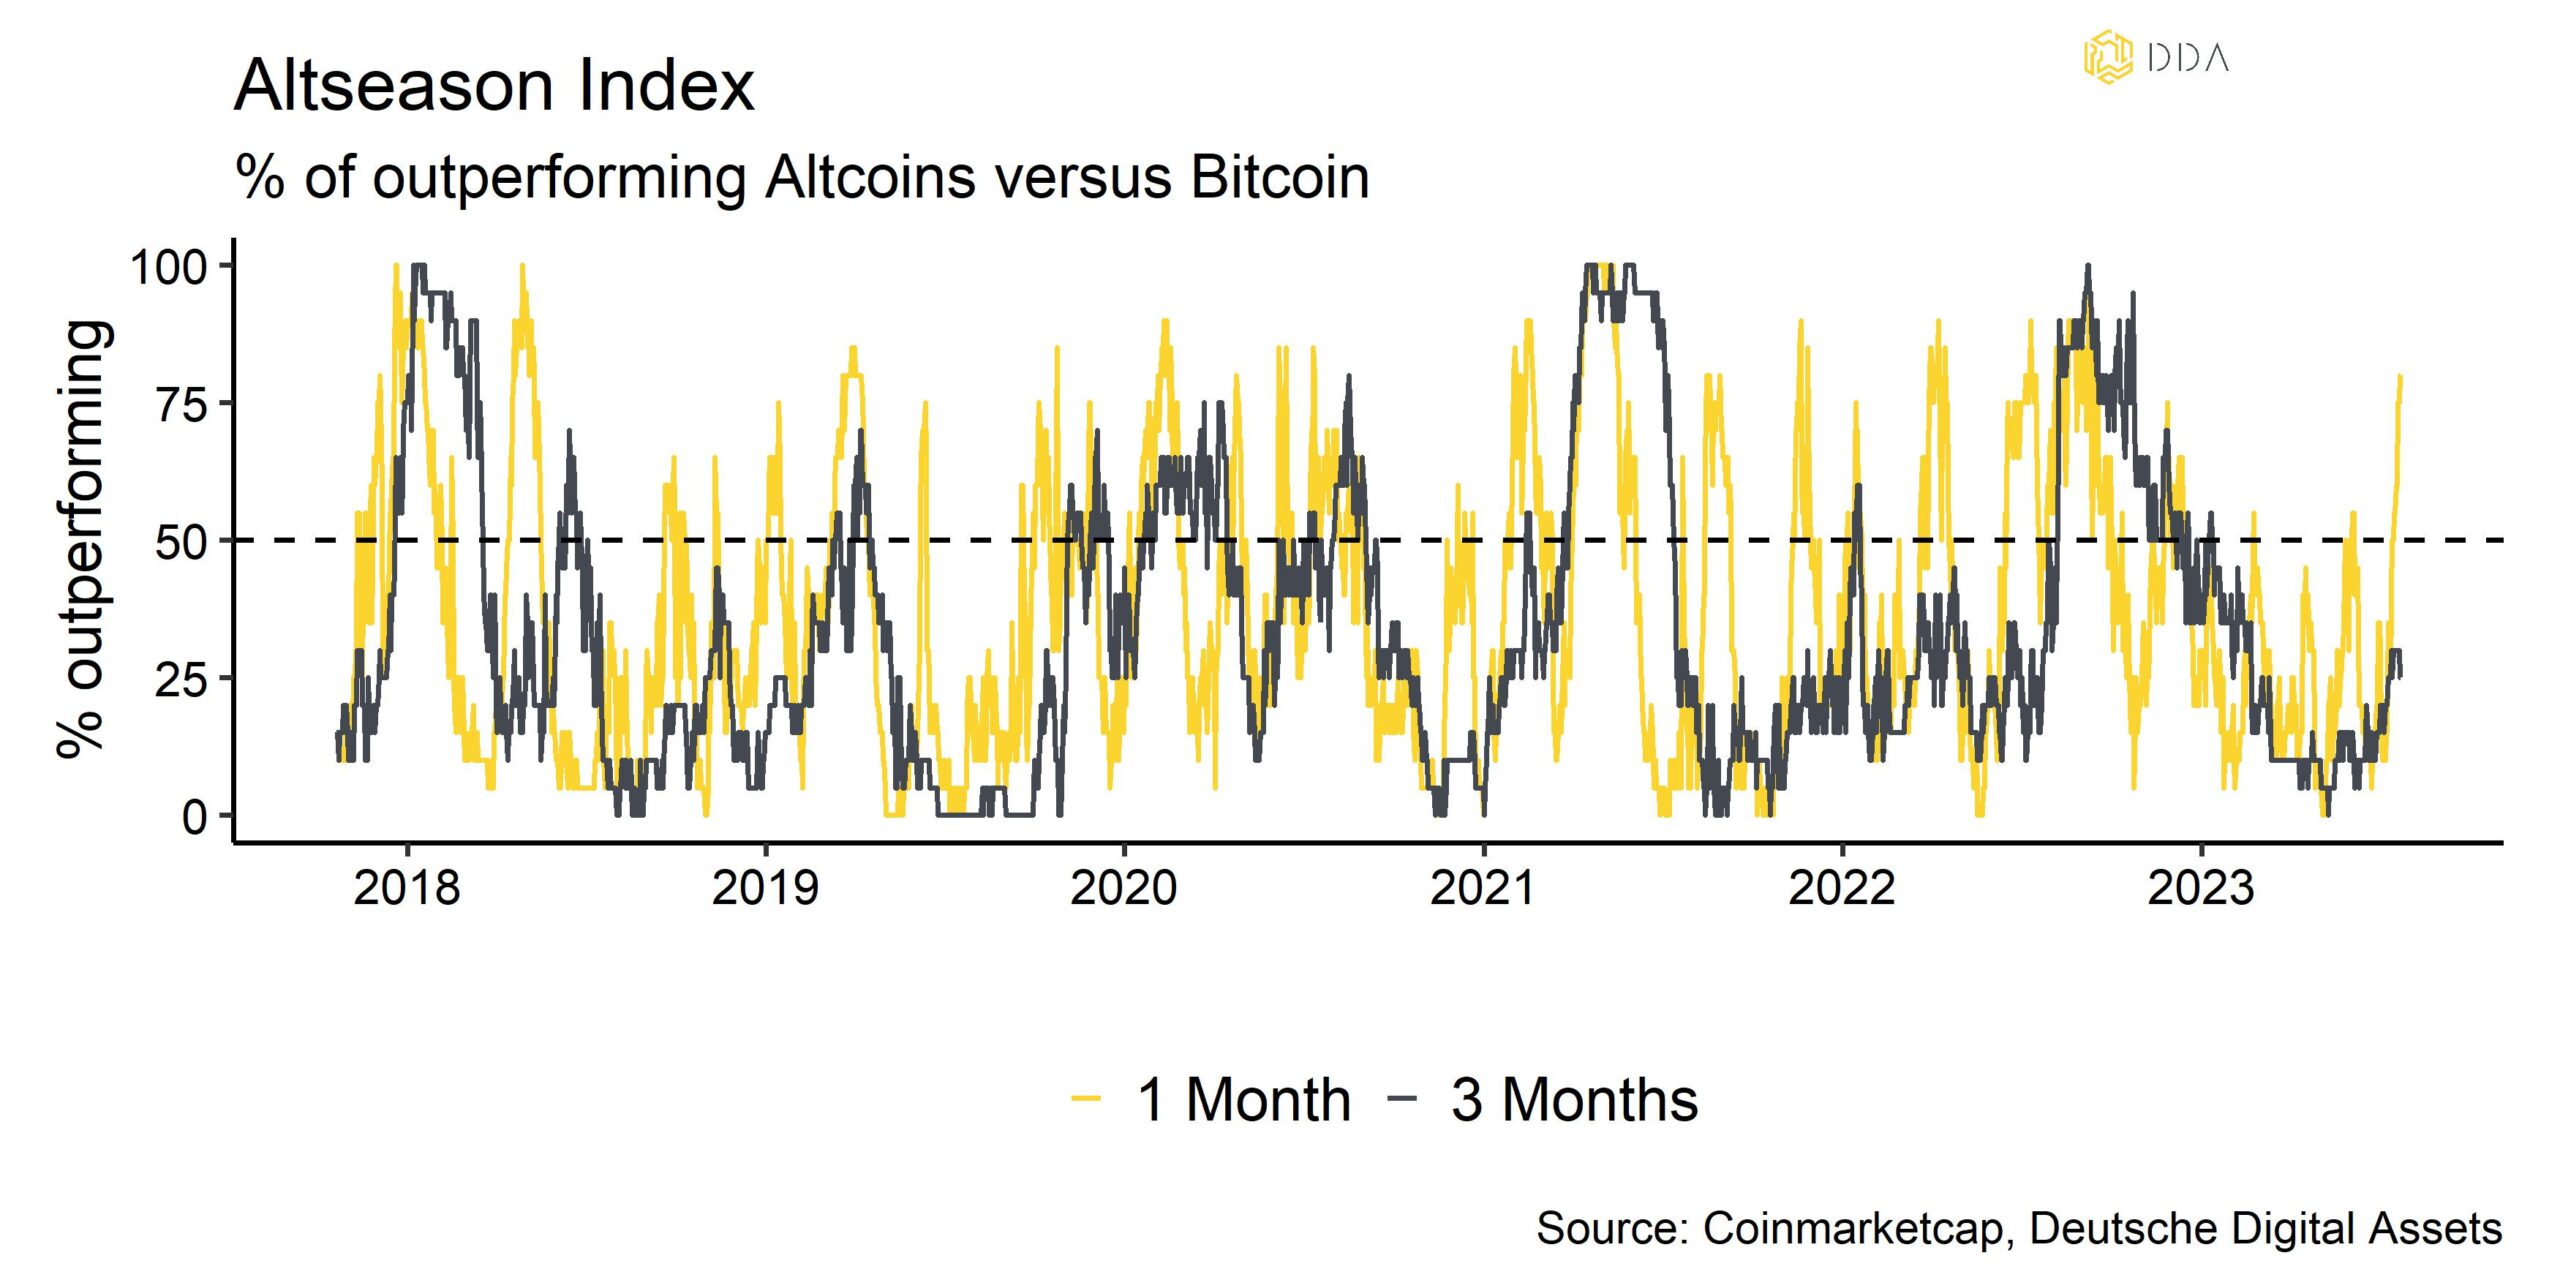 Alseason index vs bitcoin, Crypto market pulse, crypto weekly newsletter, DDA newsletter 